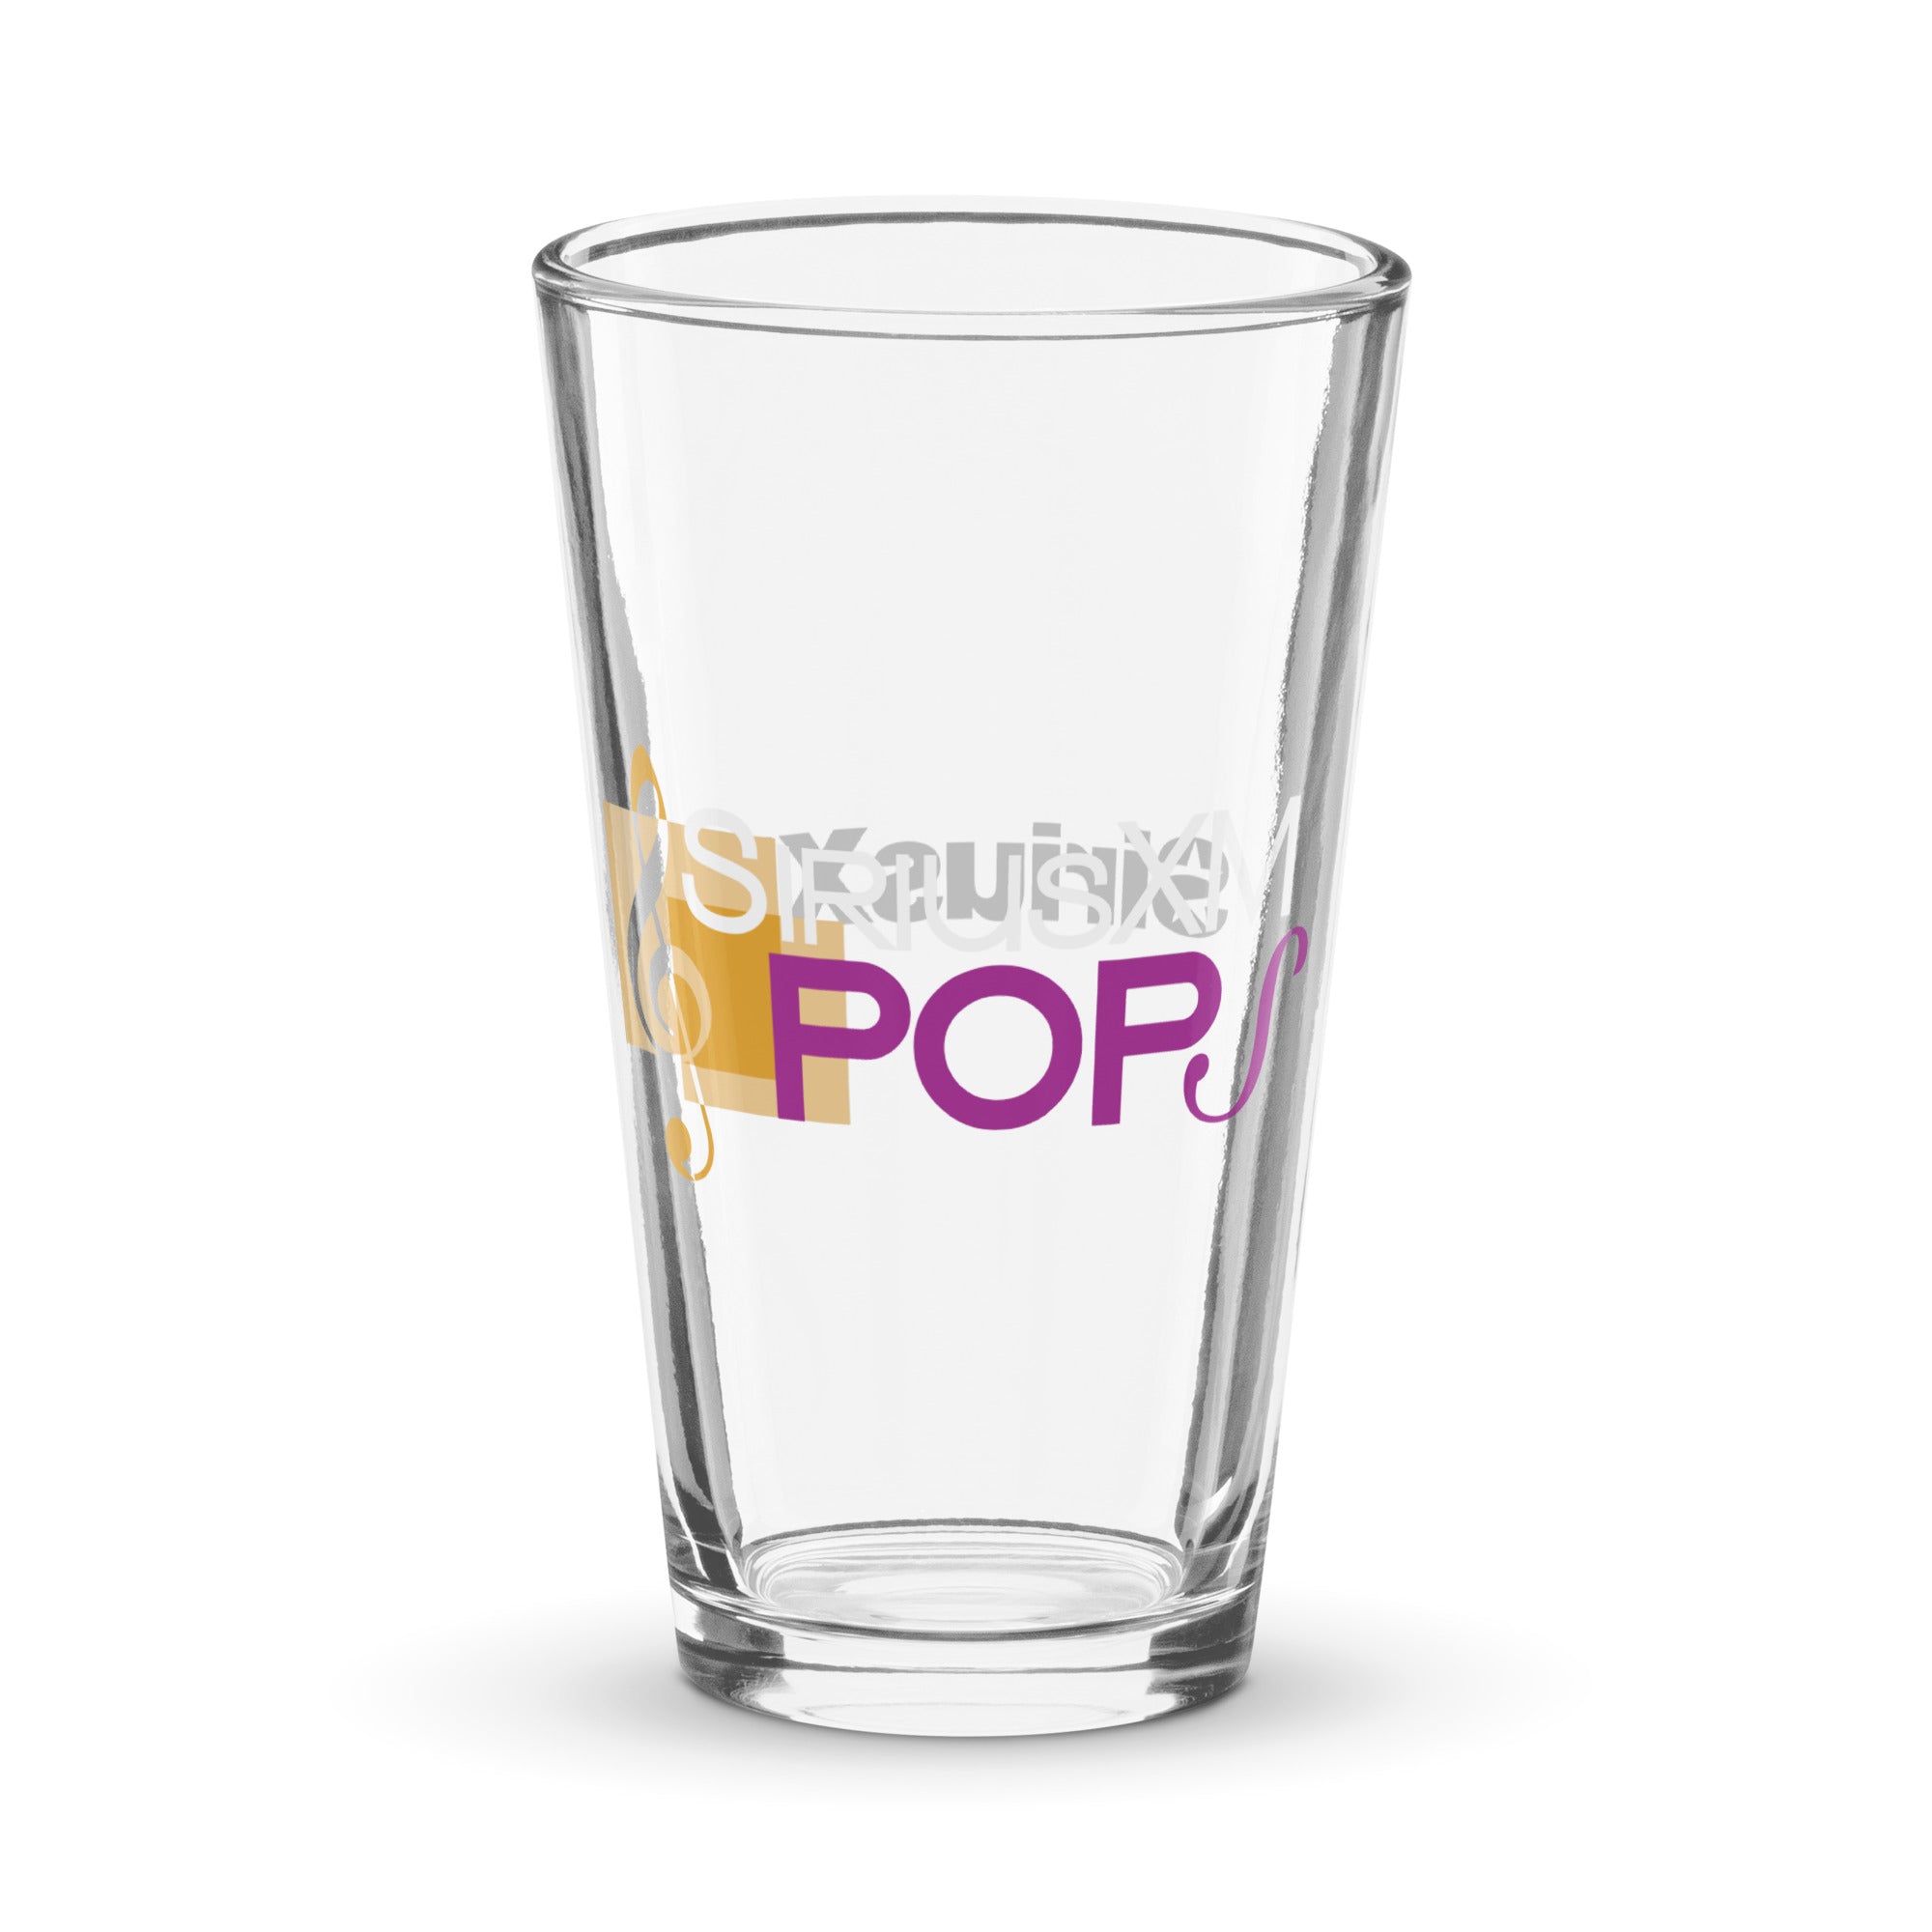 SiriusXM Pops: Pint Glass